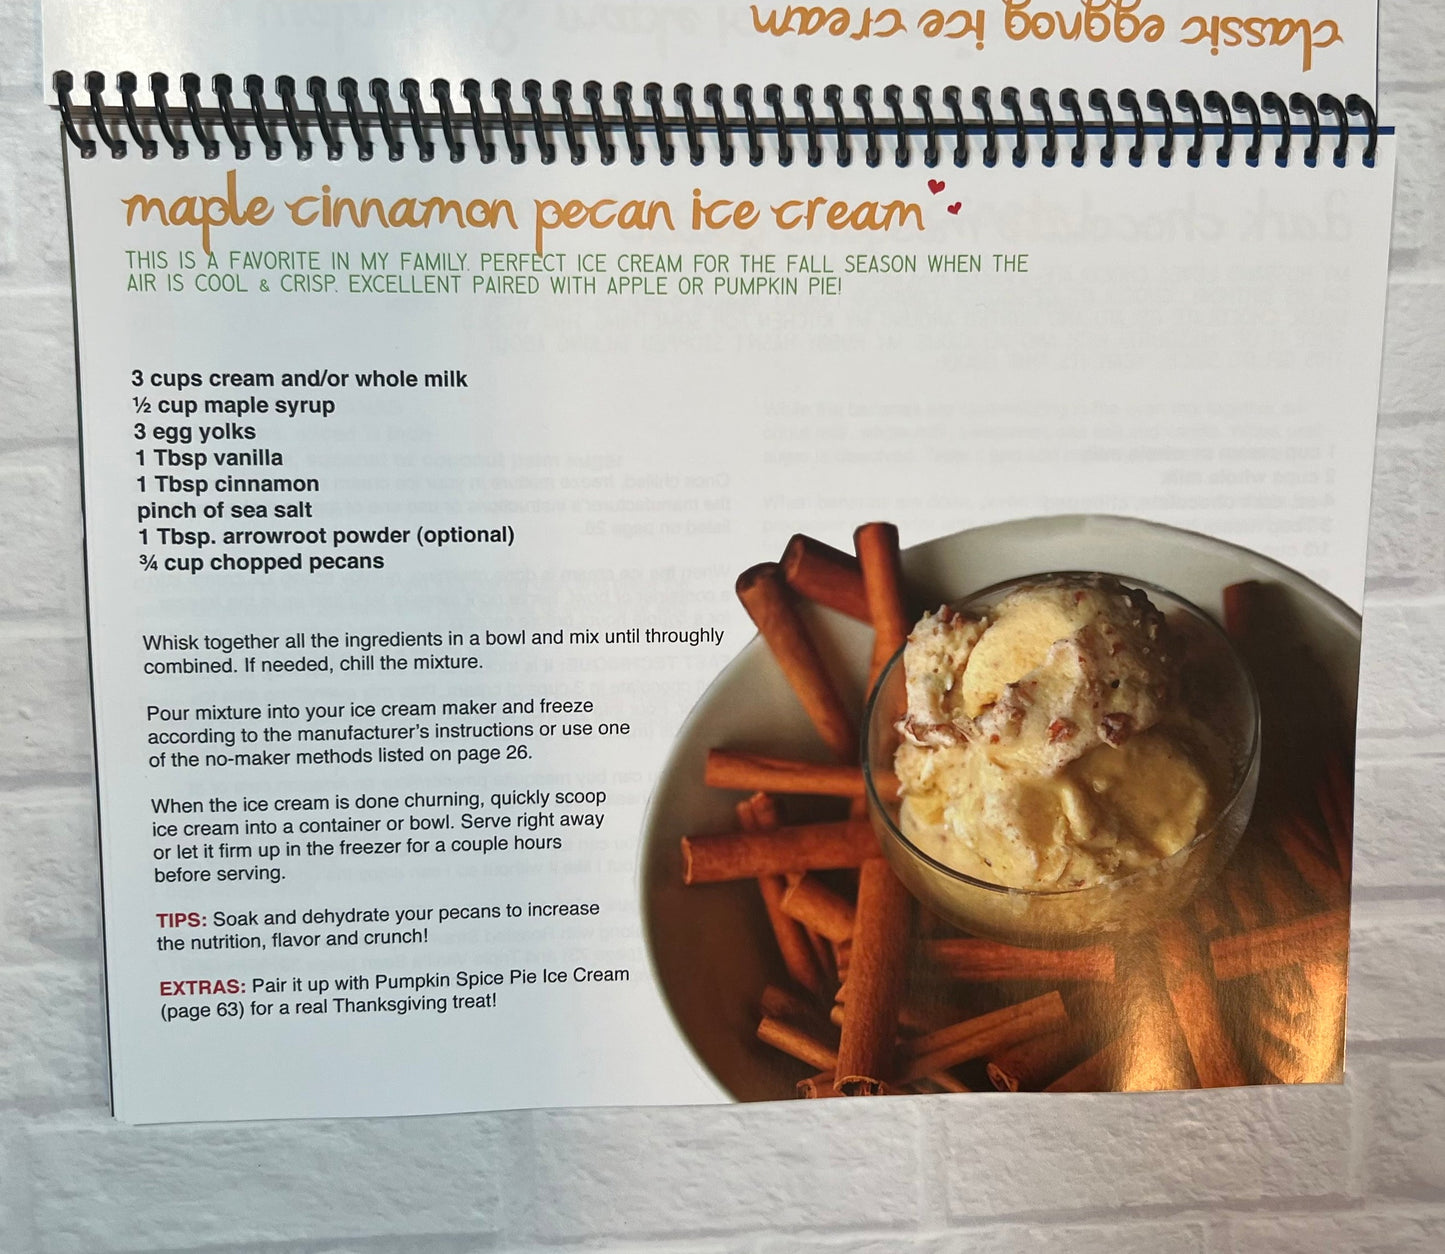 Just Making Ice Cream Cookbook - DIGITAL